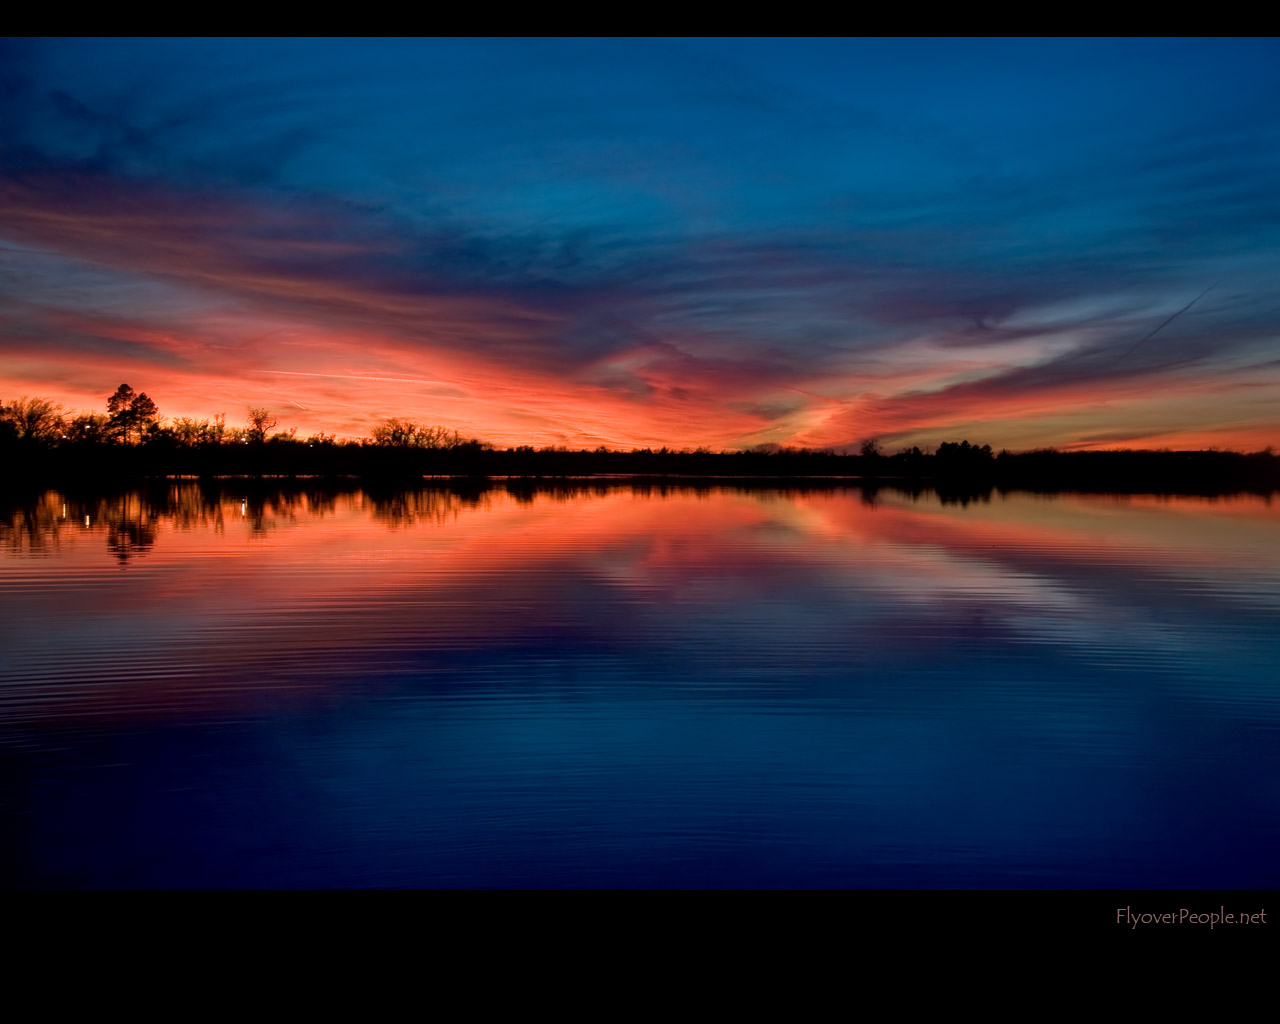 Evening Calm Sunset at Herington Lake